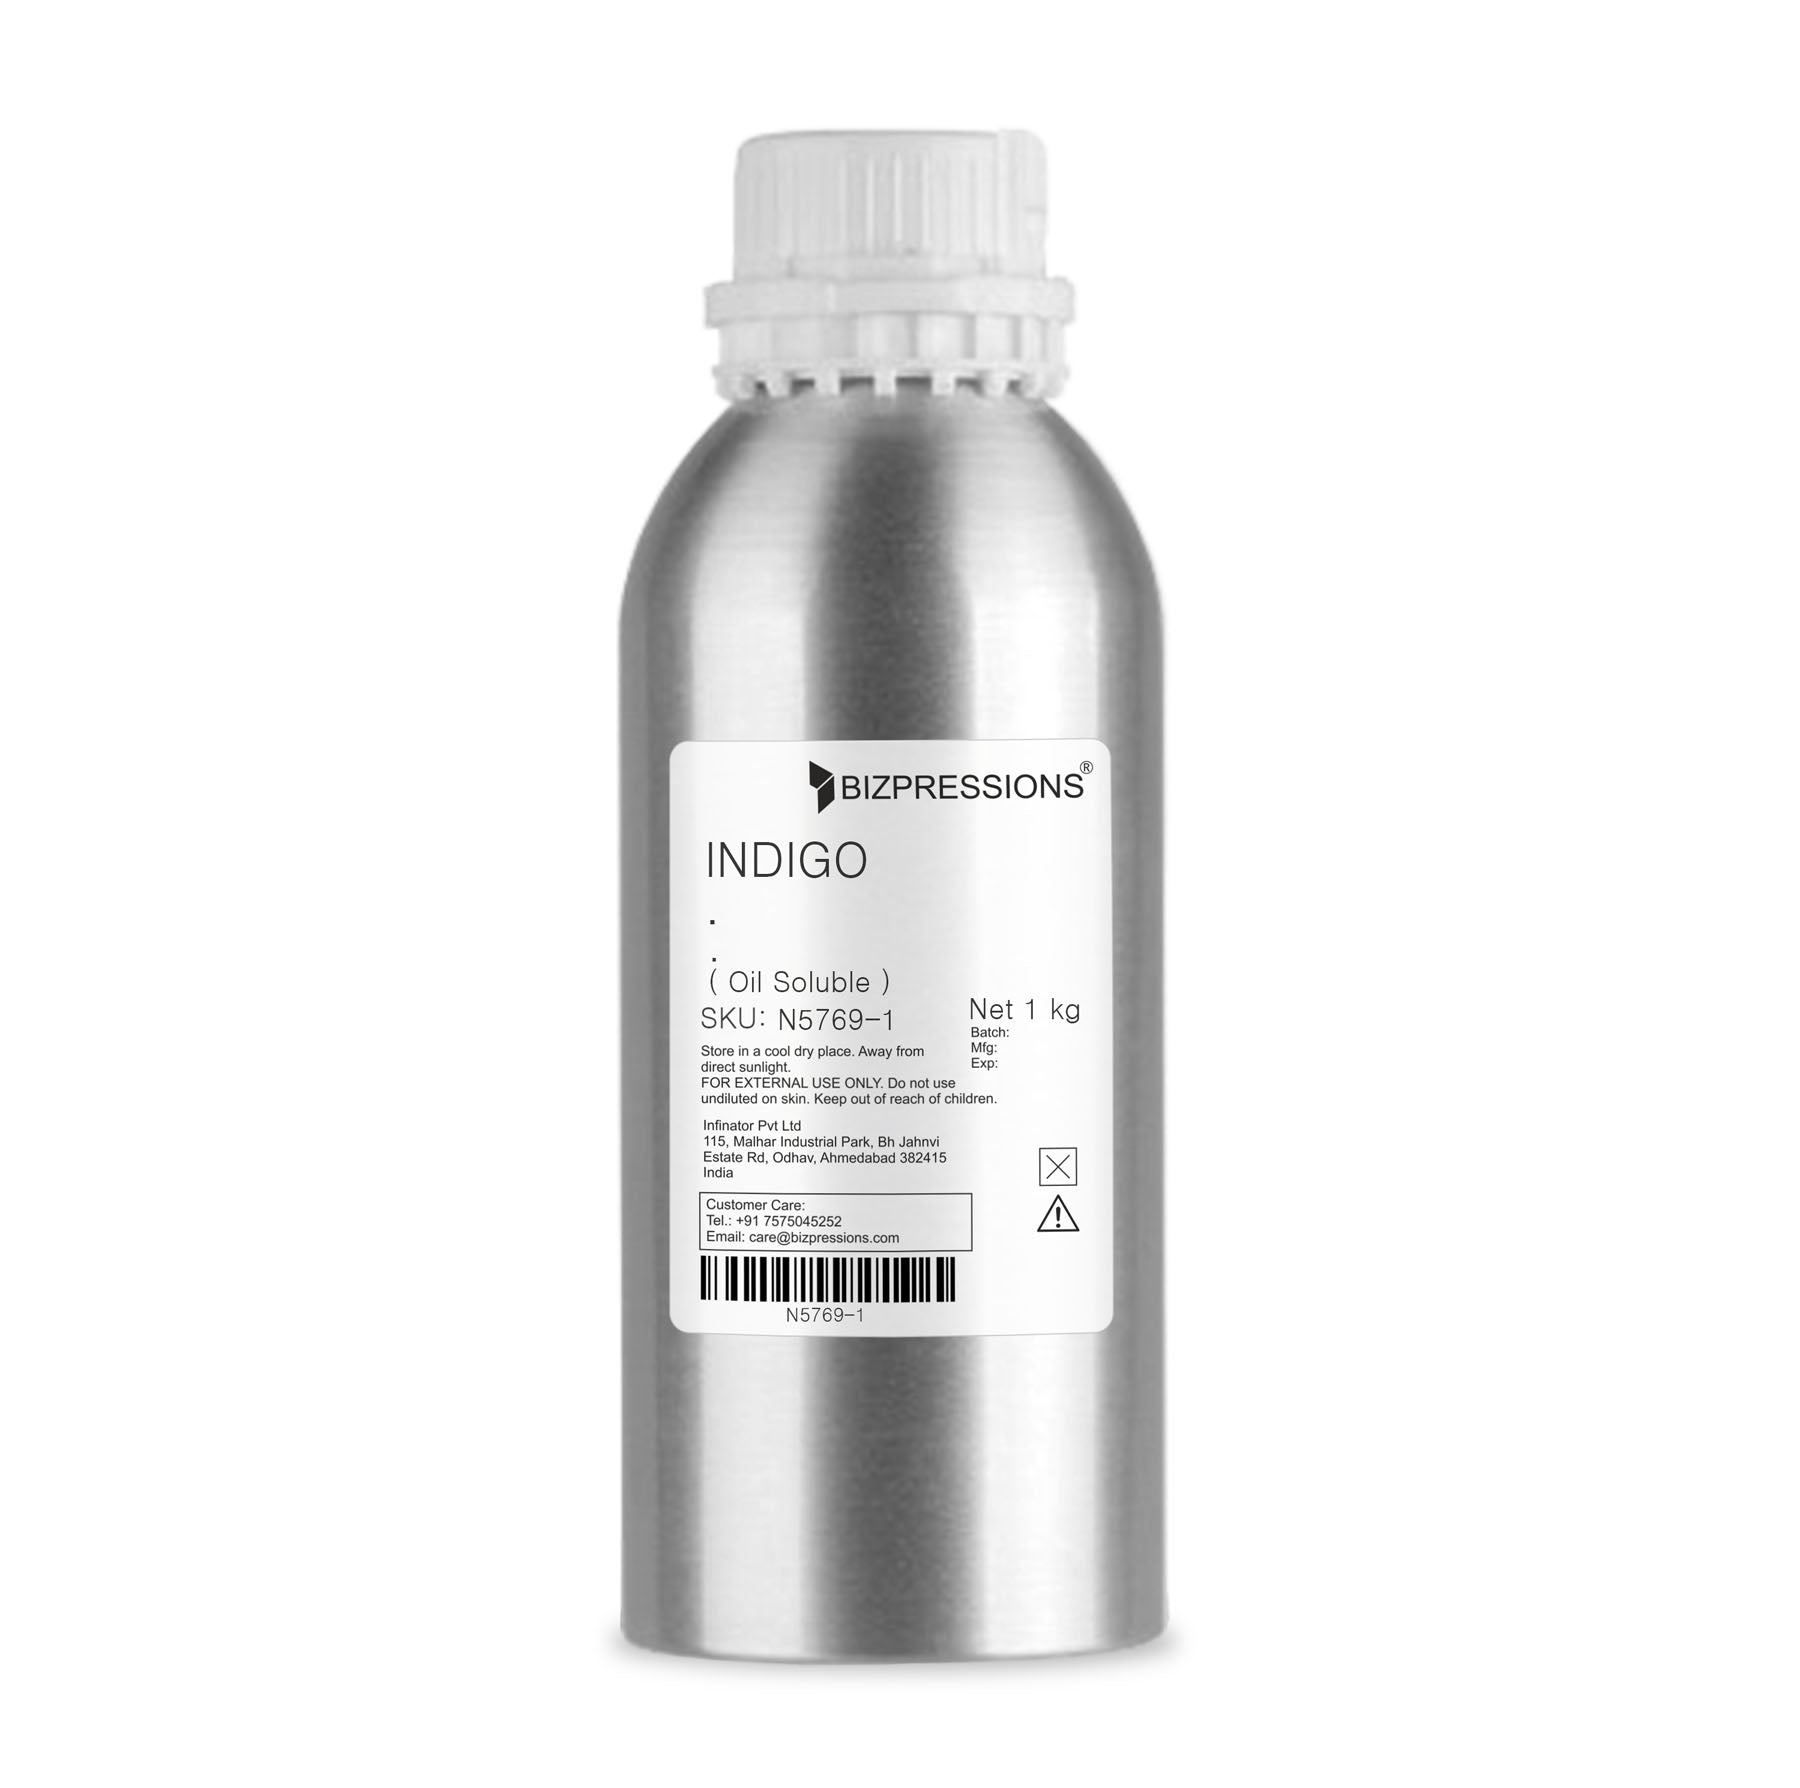 INDIGO - Fragrance ( Oil Soluble ) - 1 kg